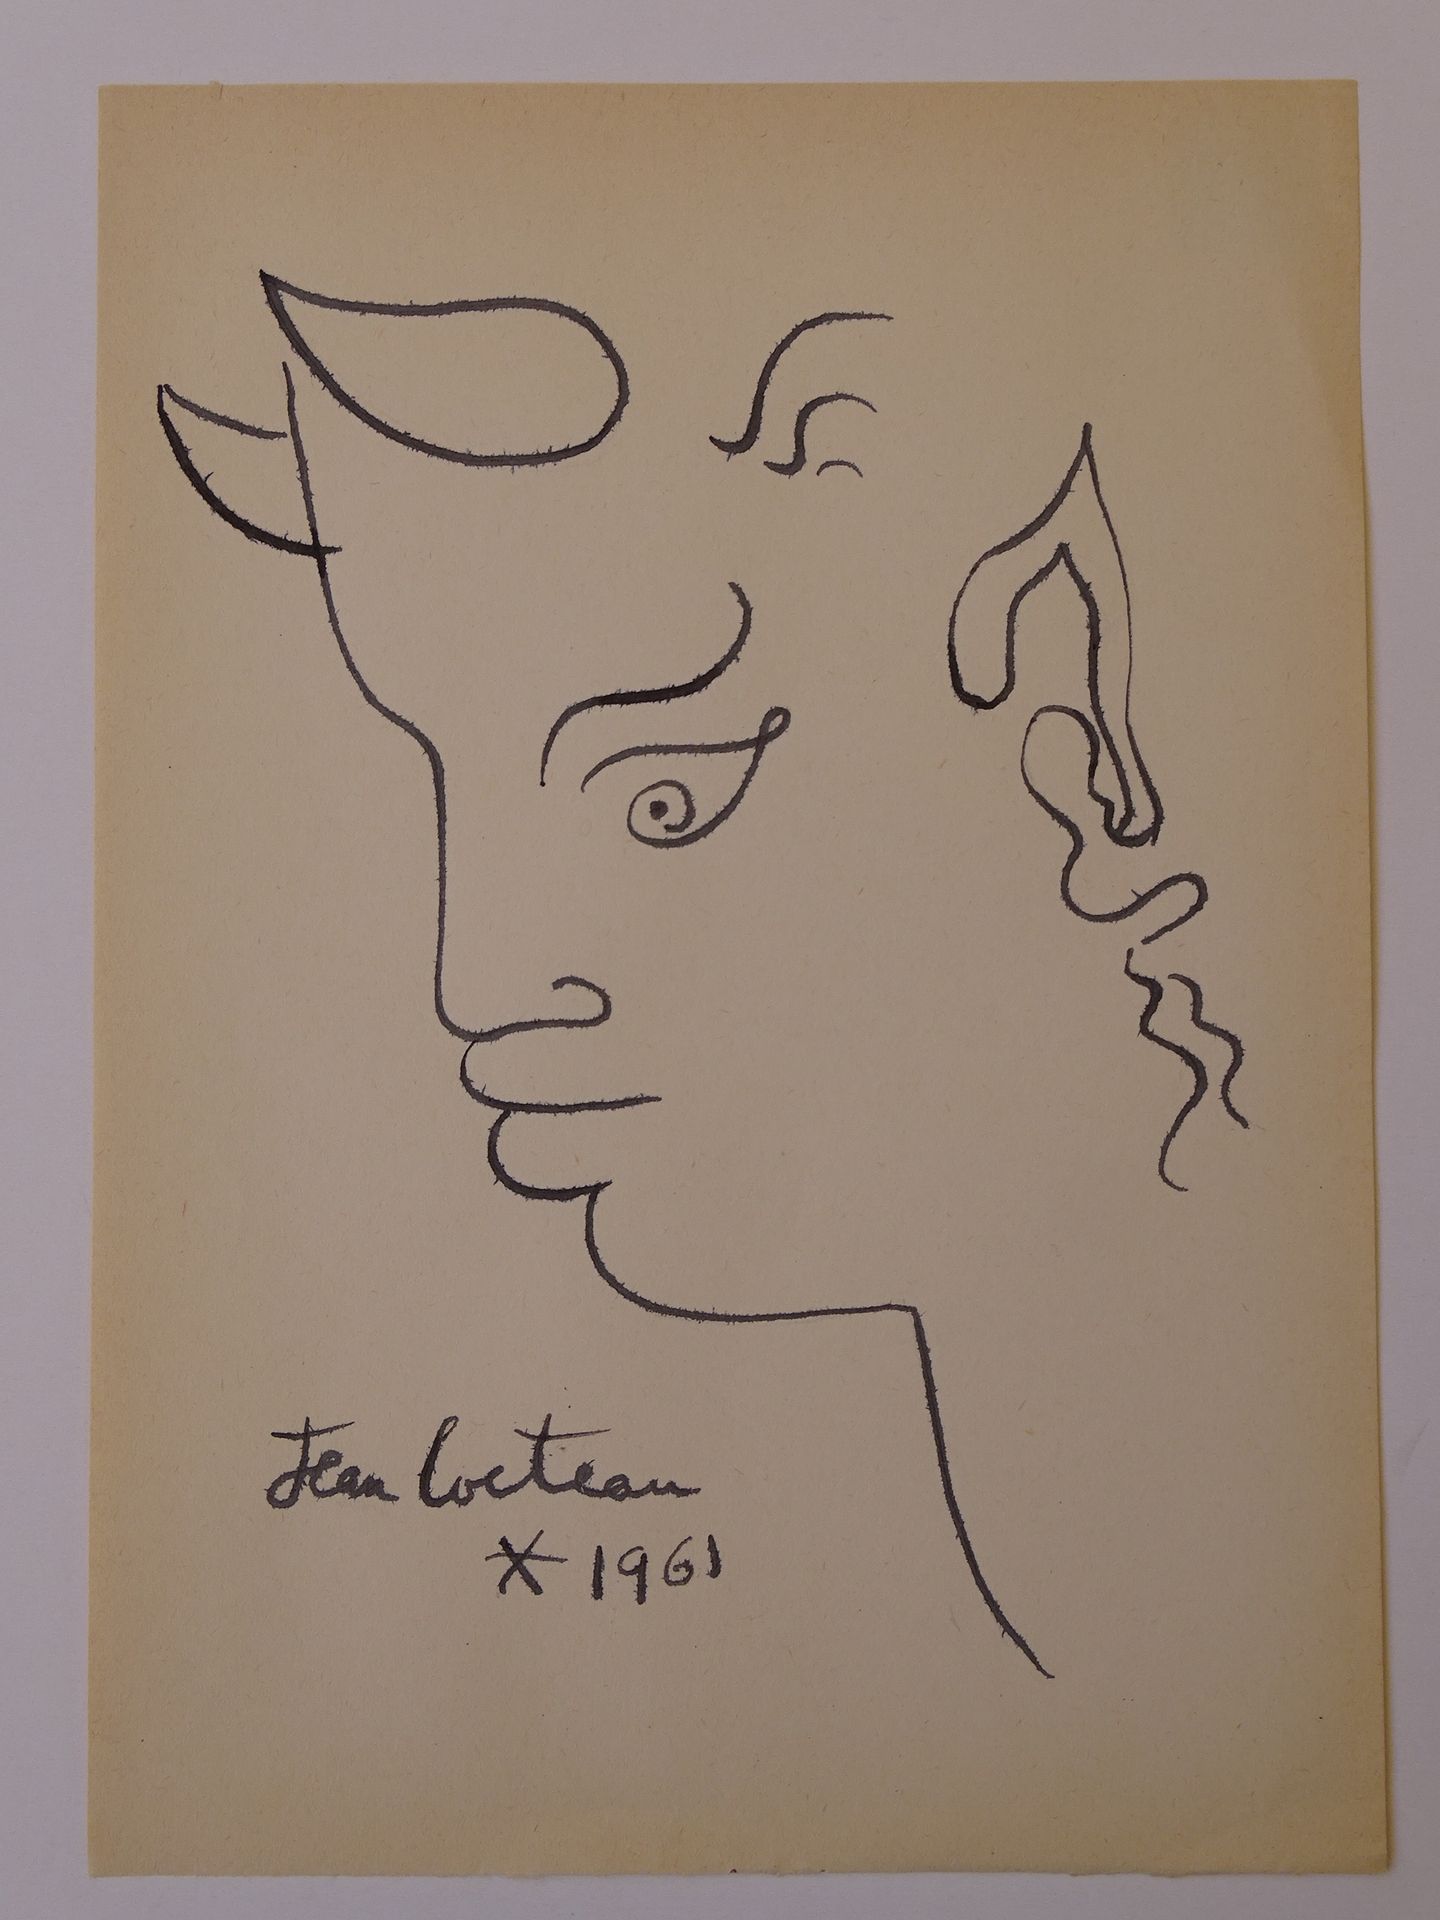 Jean Cocteau 让-科克托（署名），水墨画，手绘，26x18cm